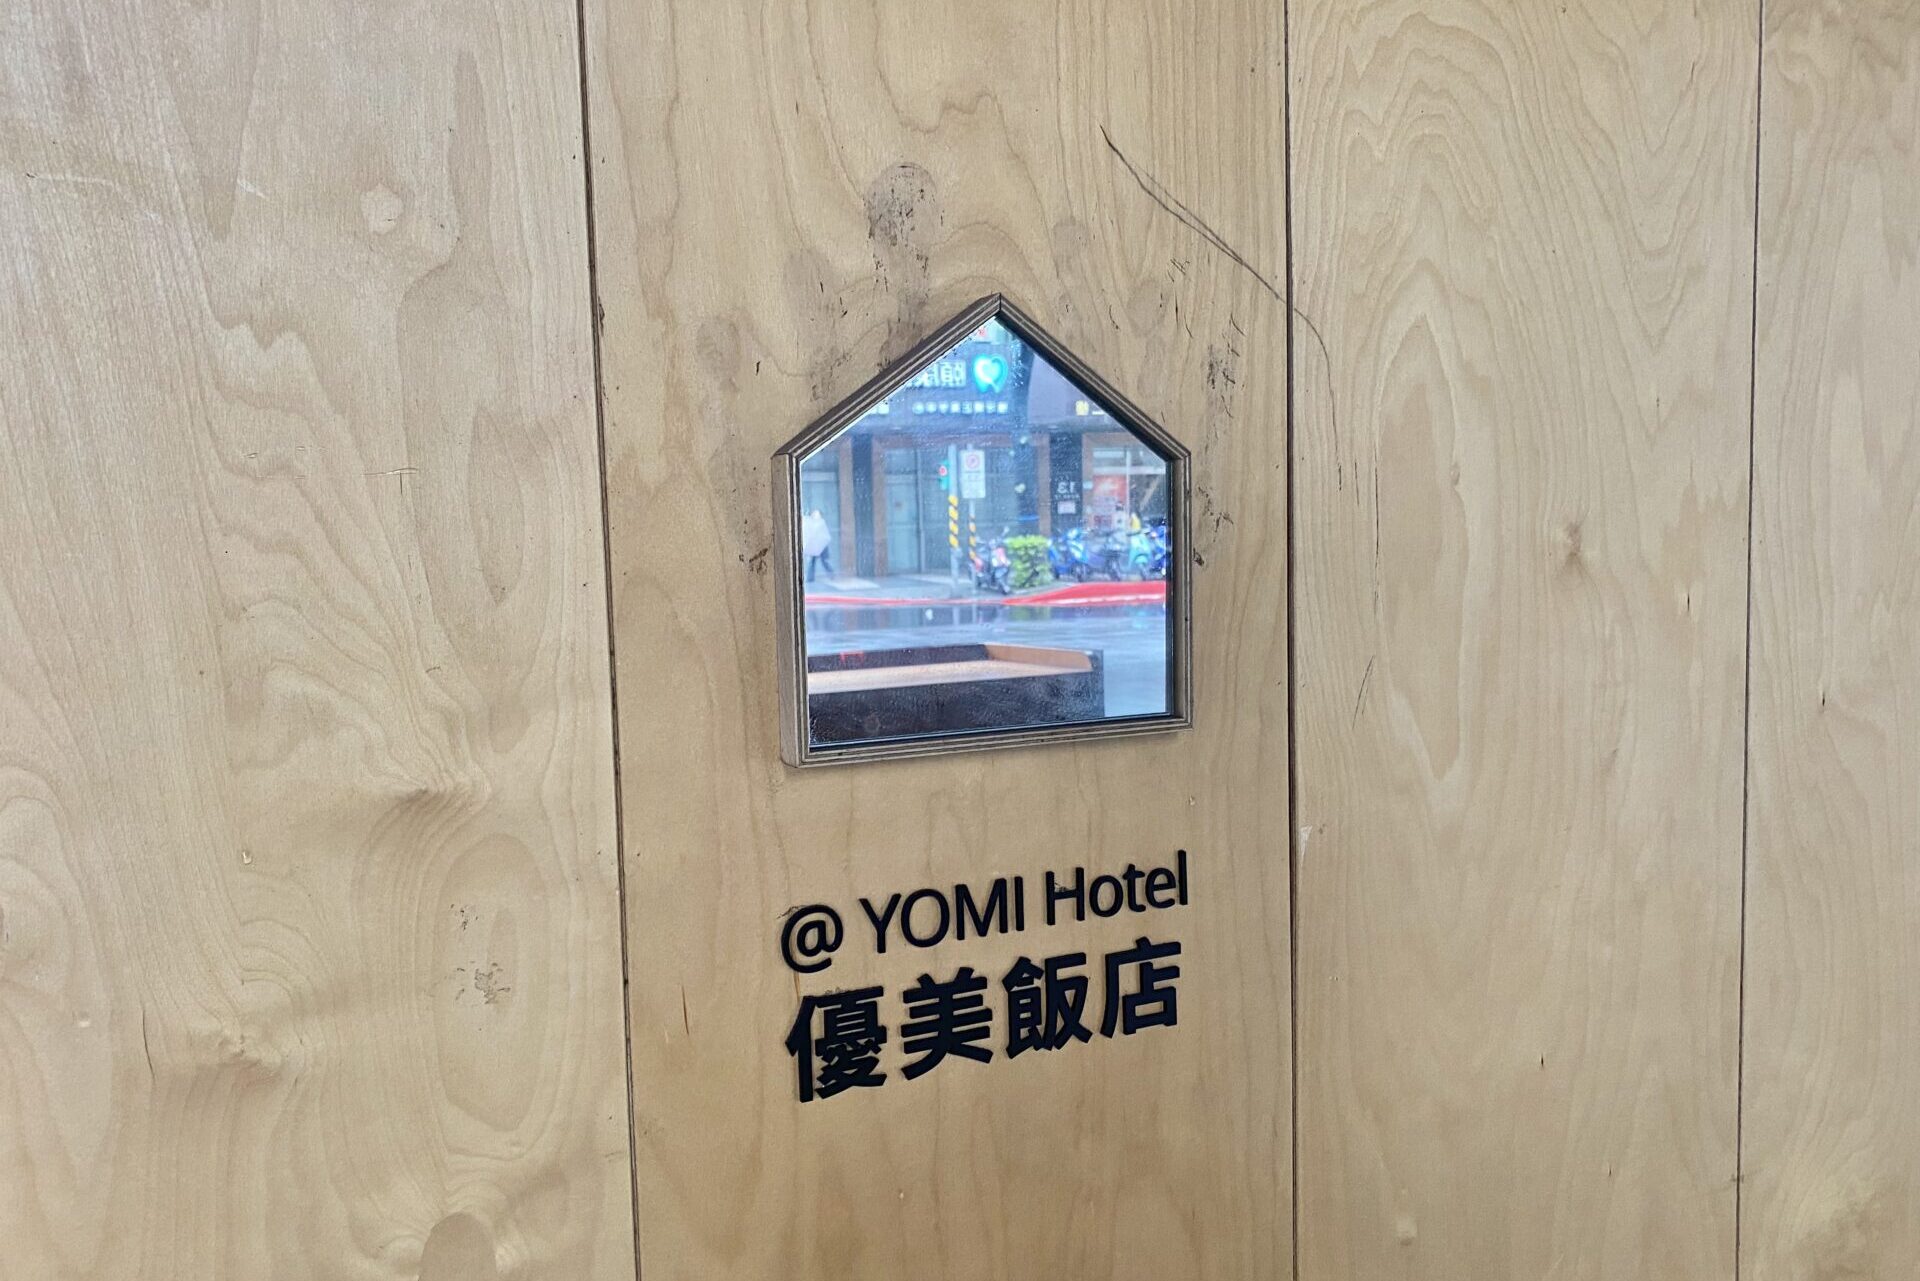 「YOMI Hotel」小さい鏡